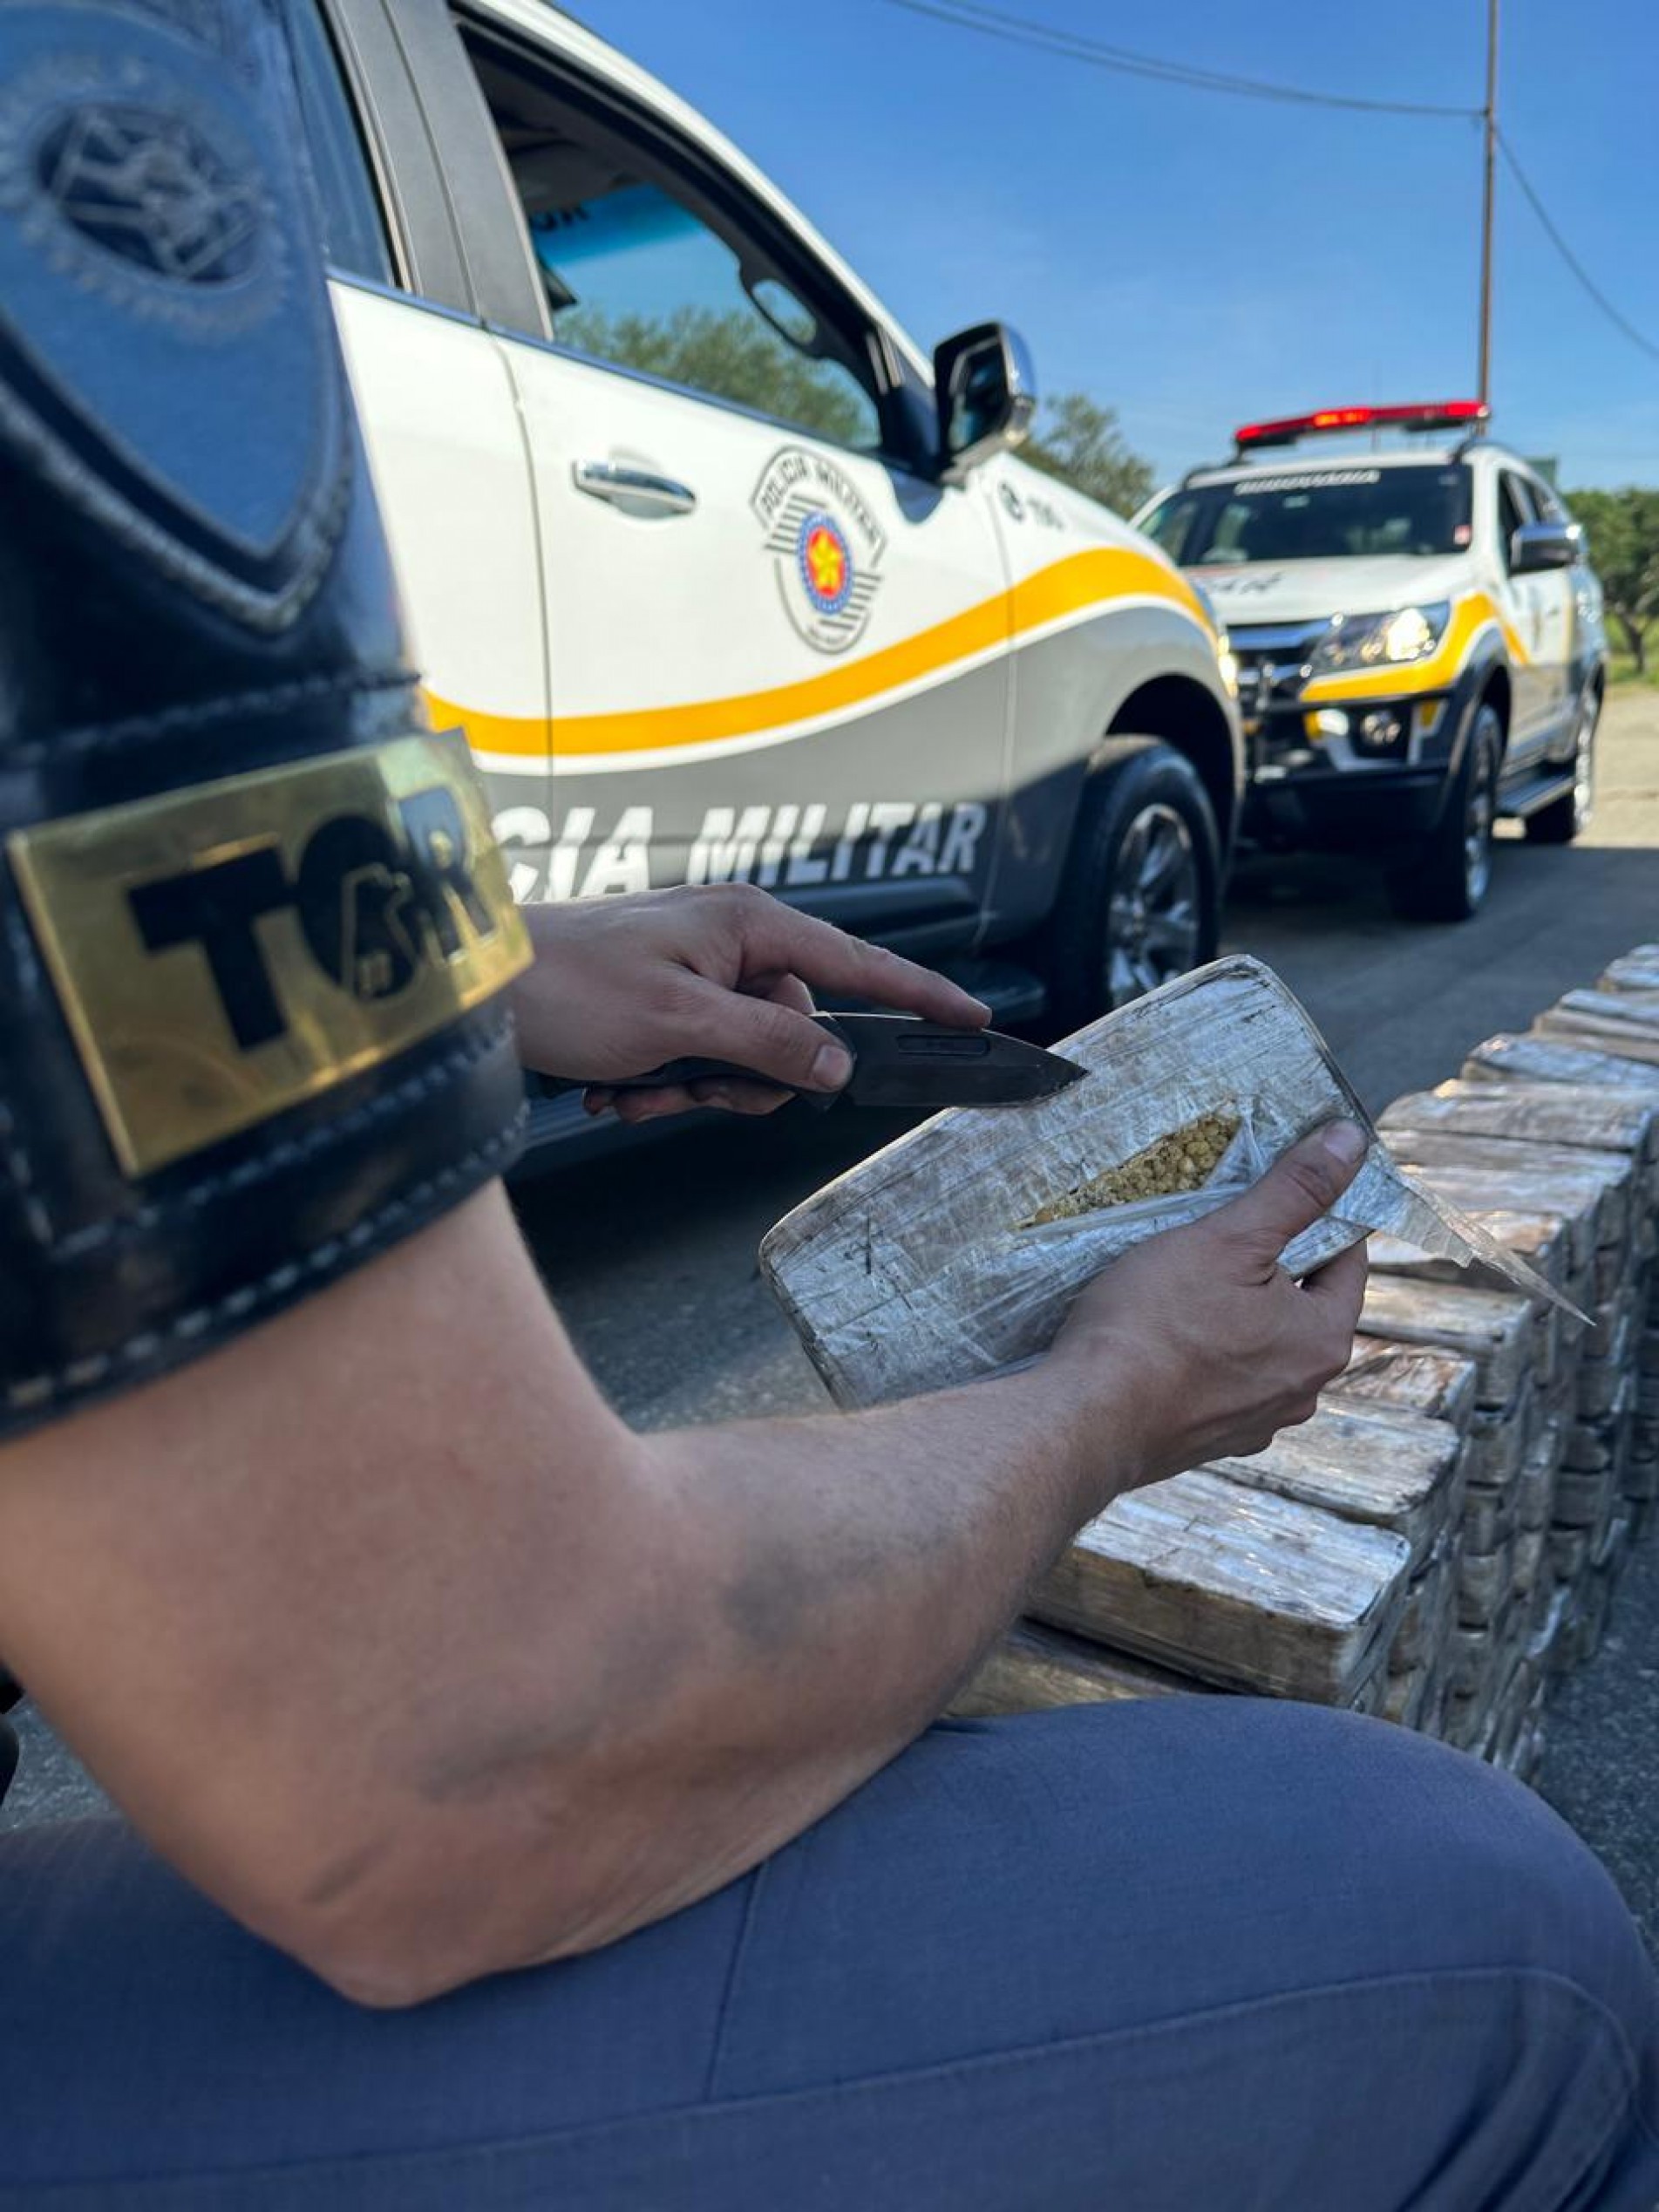 Foi encontrado 422 tijolos, sendo eles 302 tijolos de pasta base, que totalizaram 314,3 quilos da droga e 120 tijolos de cocaína, que somaram 131,5 quilos